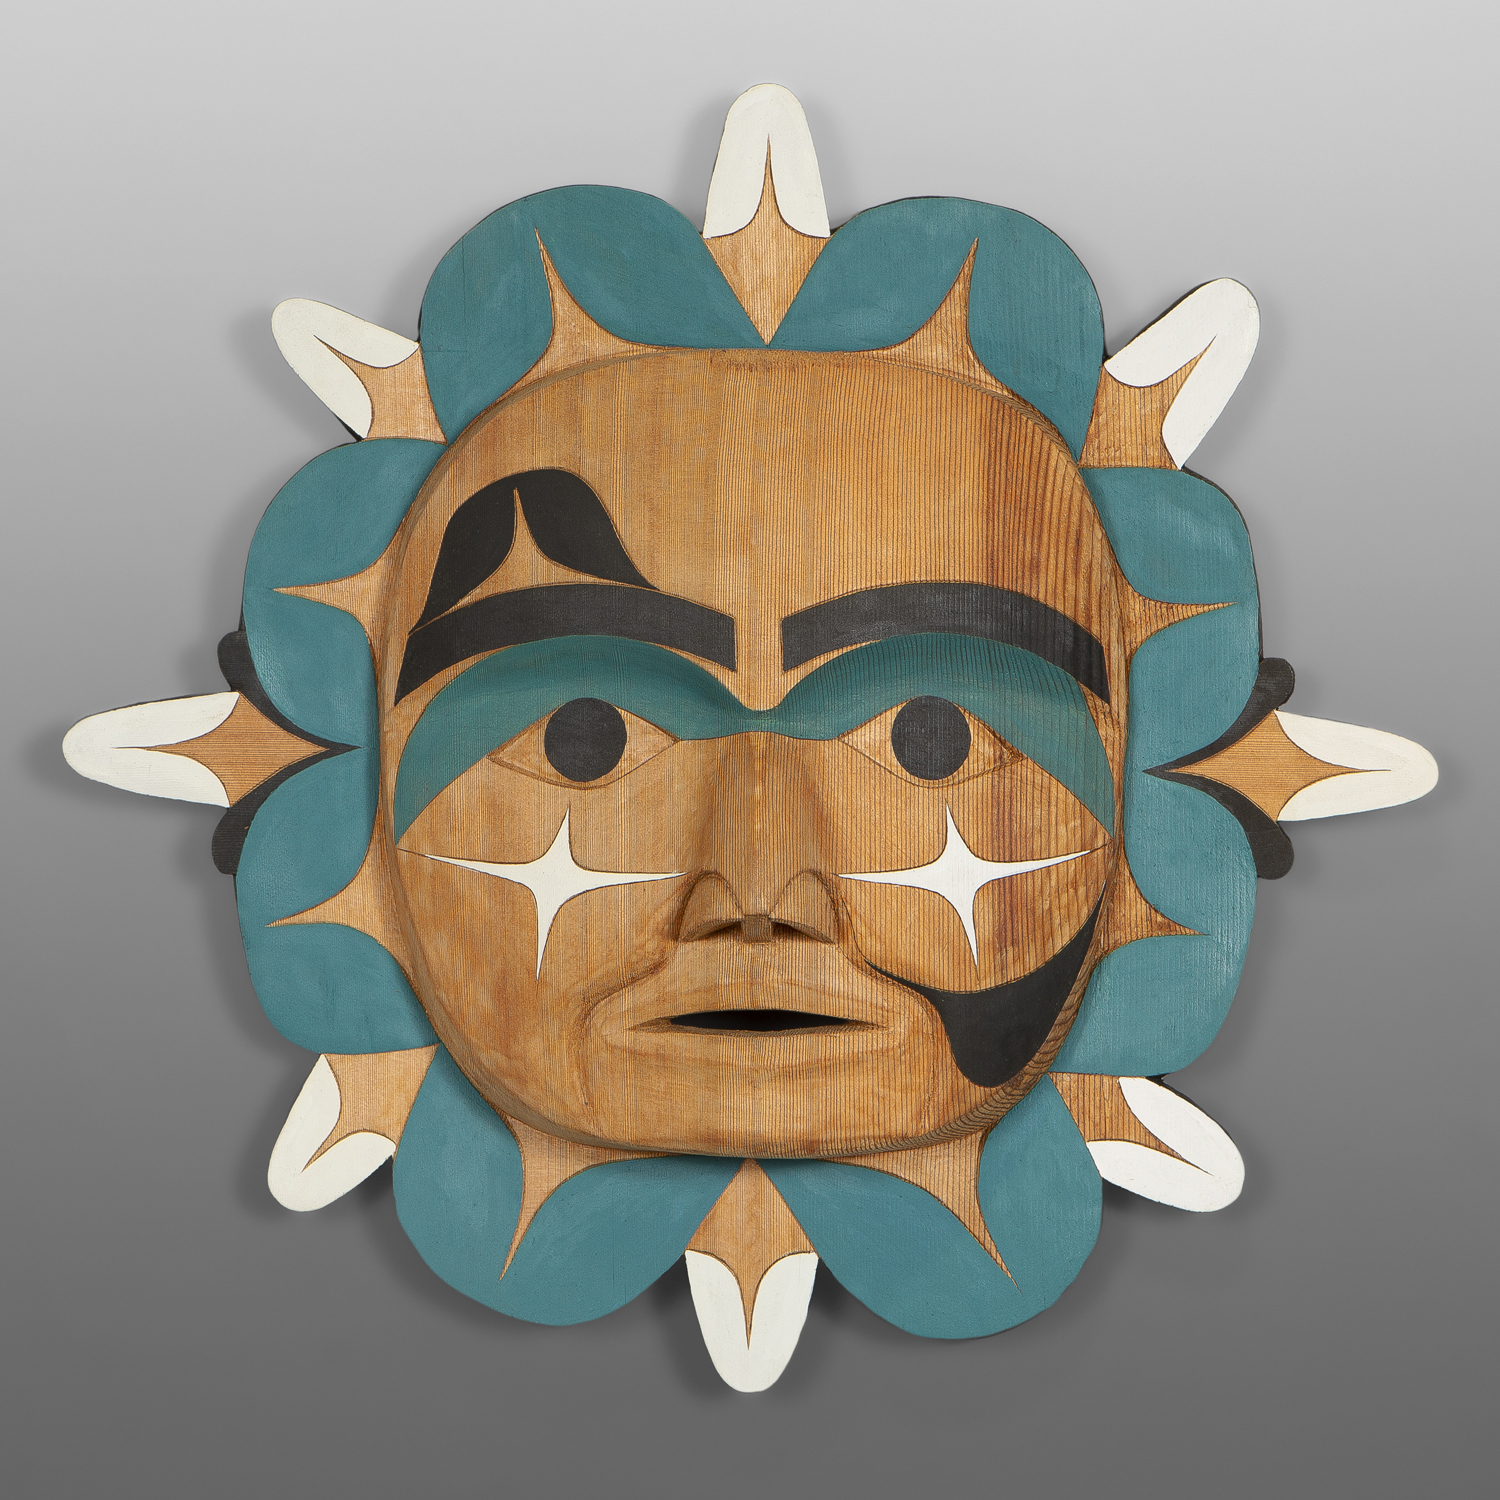 Navigation Mask Tim Paul
Nuu-Chah-Nulth Red cedar, paint
17½” x 16½” x 4½”